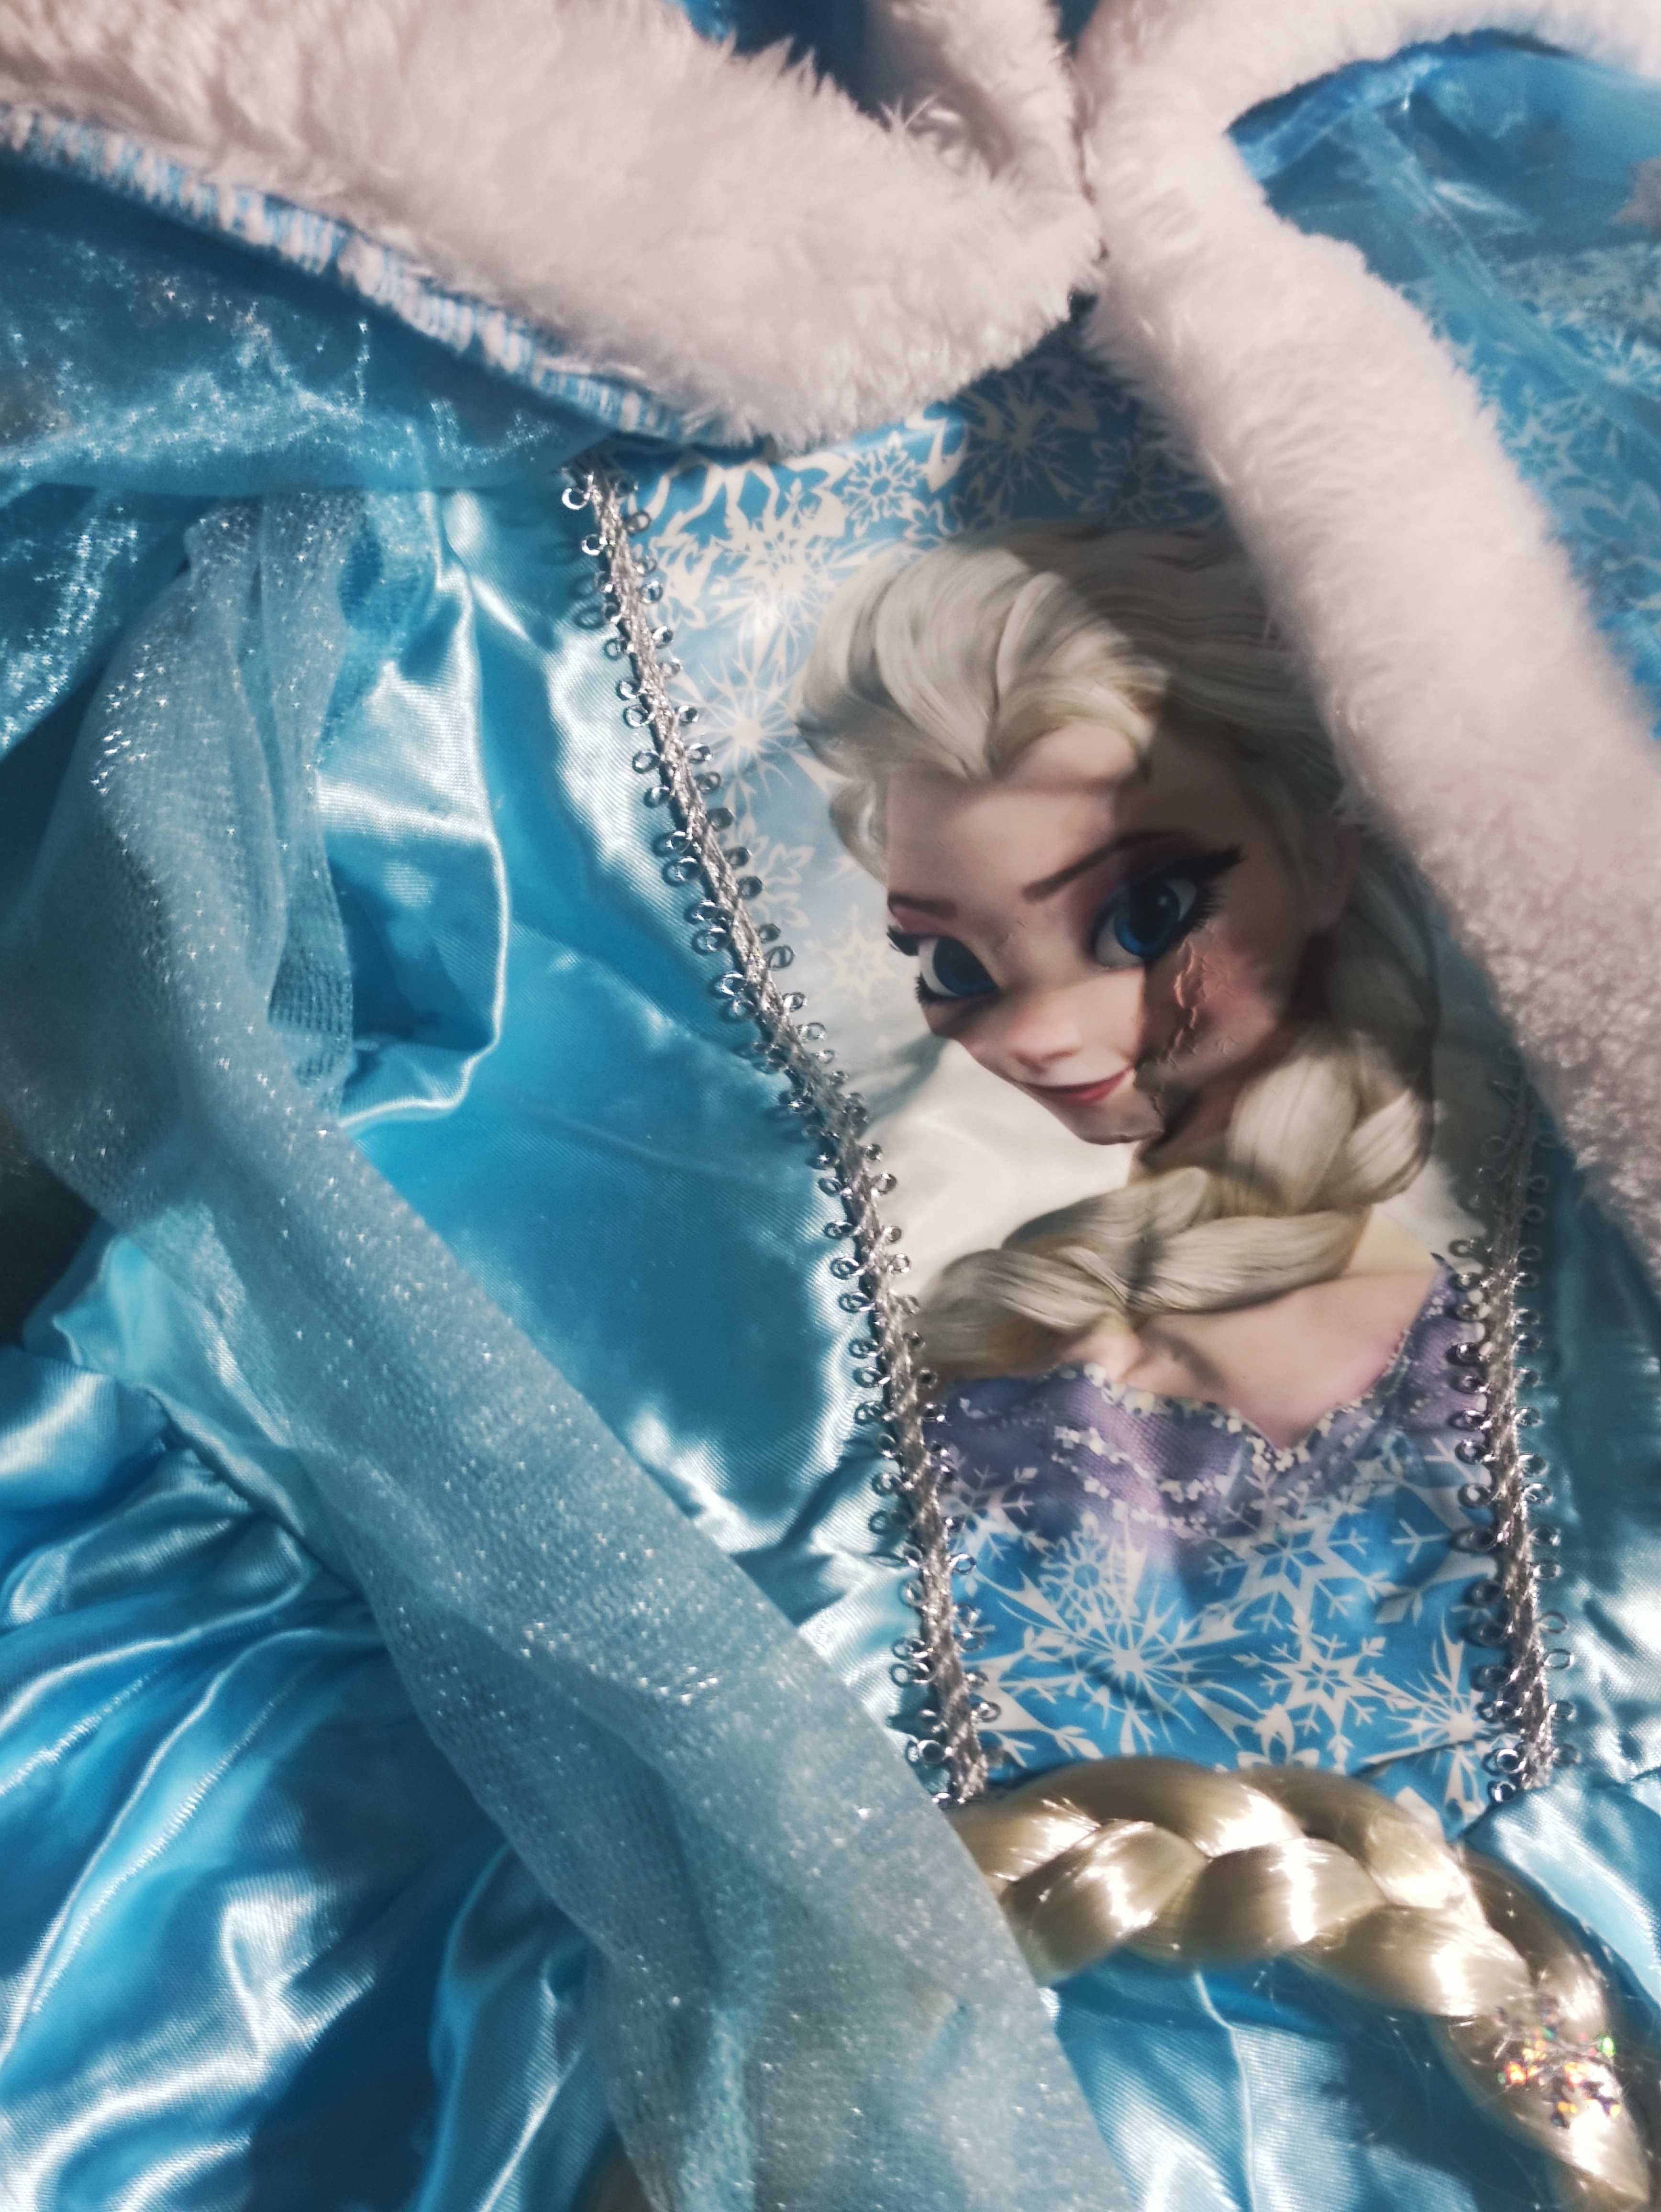 Lote acessórios Frozen Disney capa de fantasia, vestido, trança 5 anos